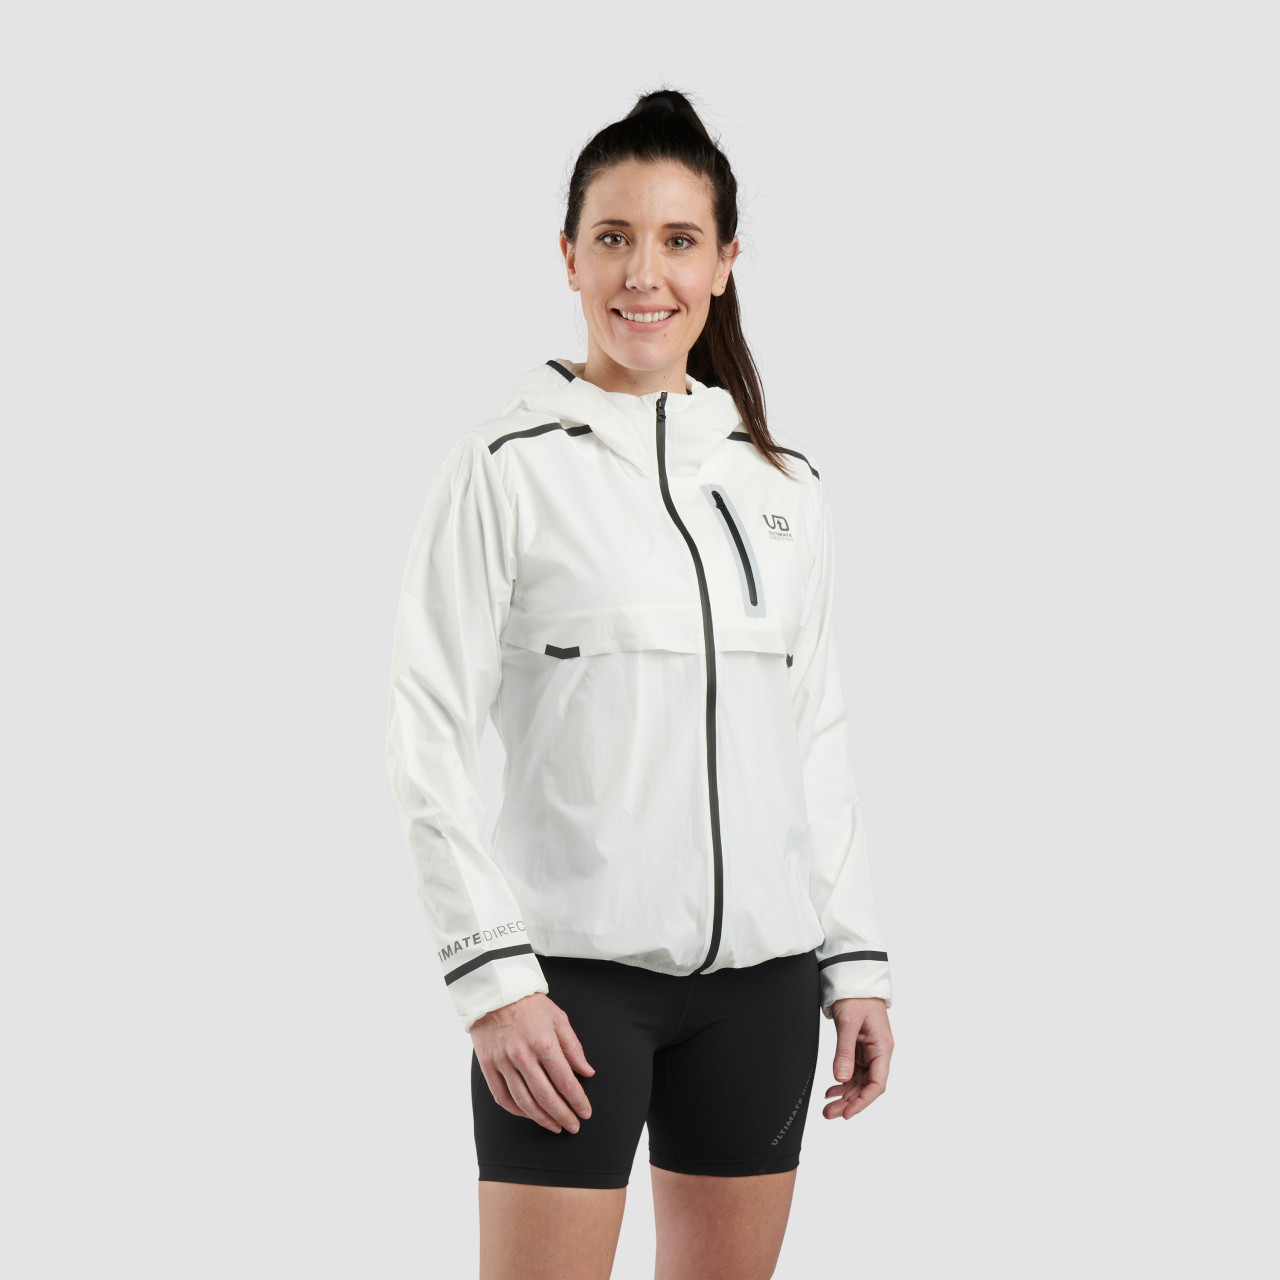 Ultimate Direction Women's Aerolight Wind Jacket in White Size XL